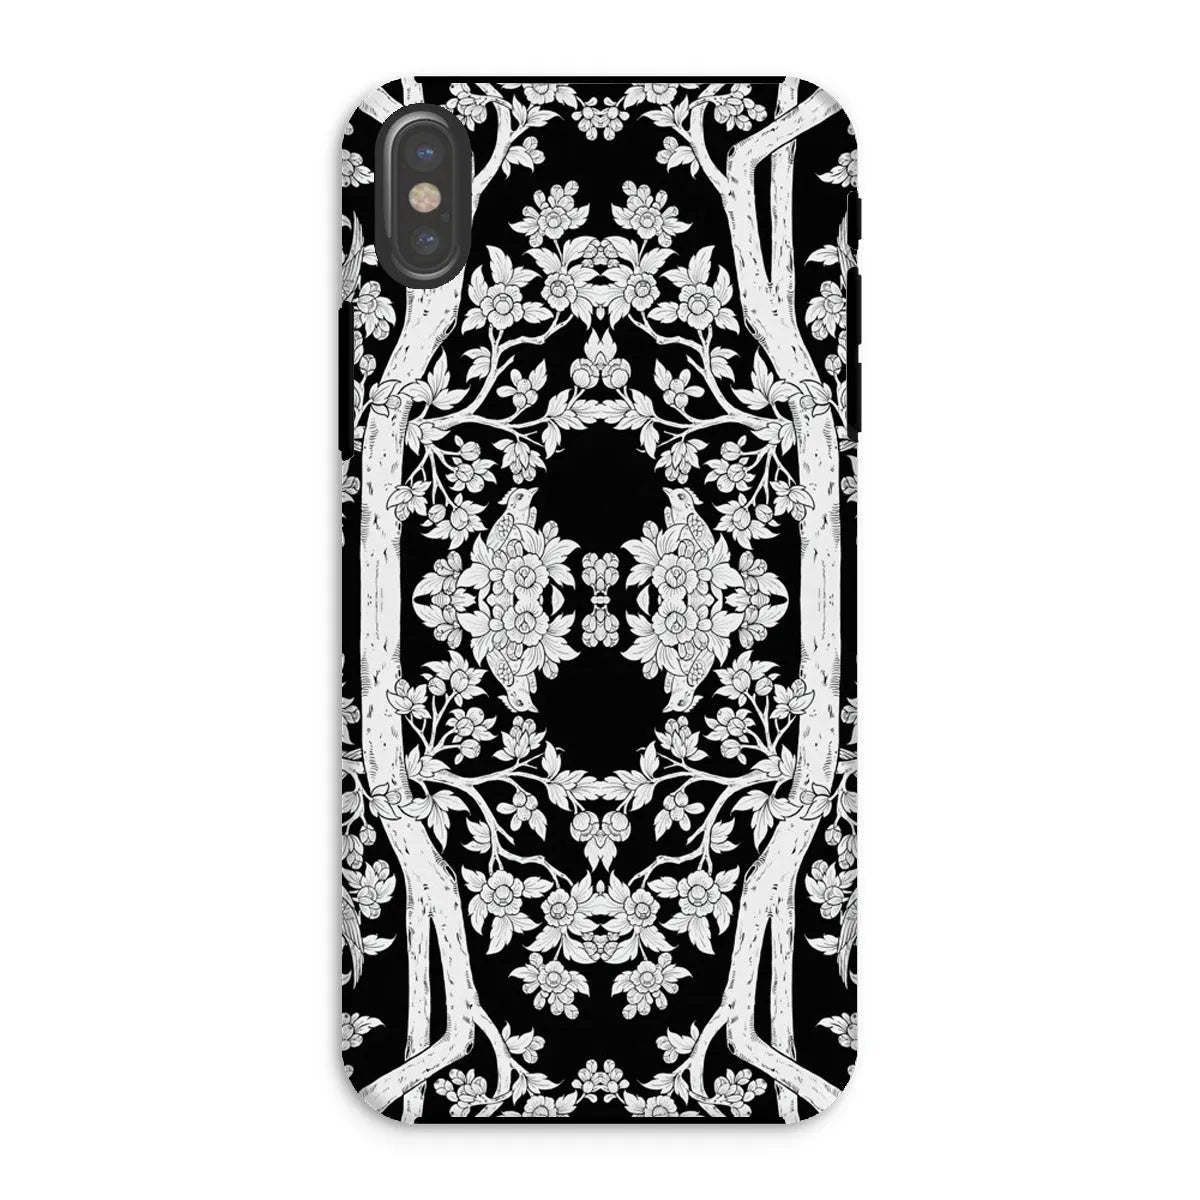 Aviary Black Aesthetic Pattern Art Phone Case - Iphone Xs / Matte - Mobile Phone Cases - Aesthetic Art